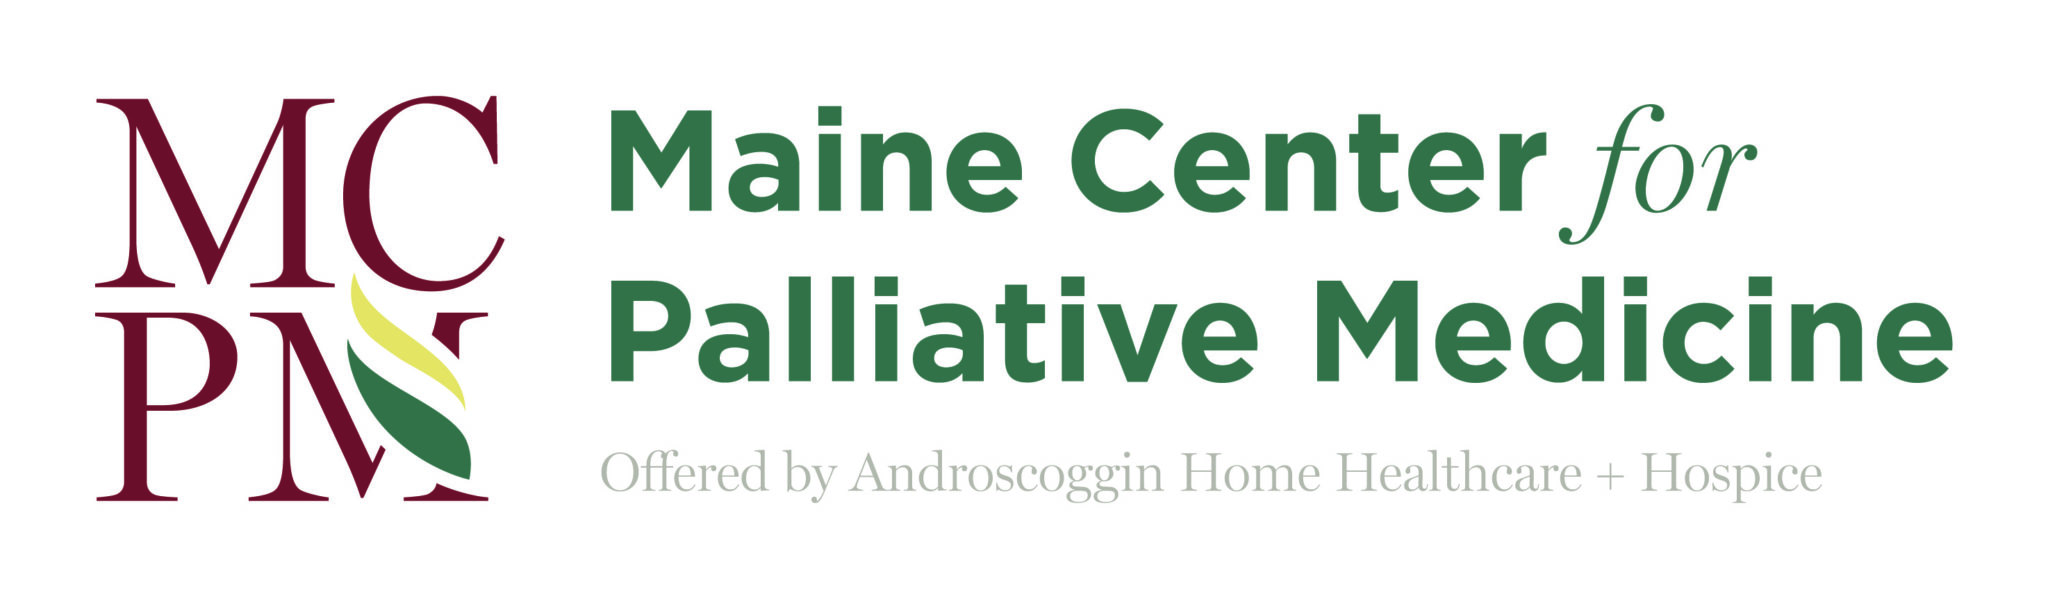 Maine Center for Palliative Medicine Logo